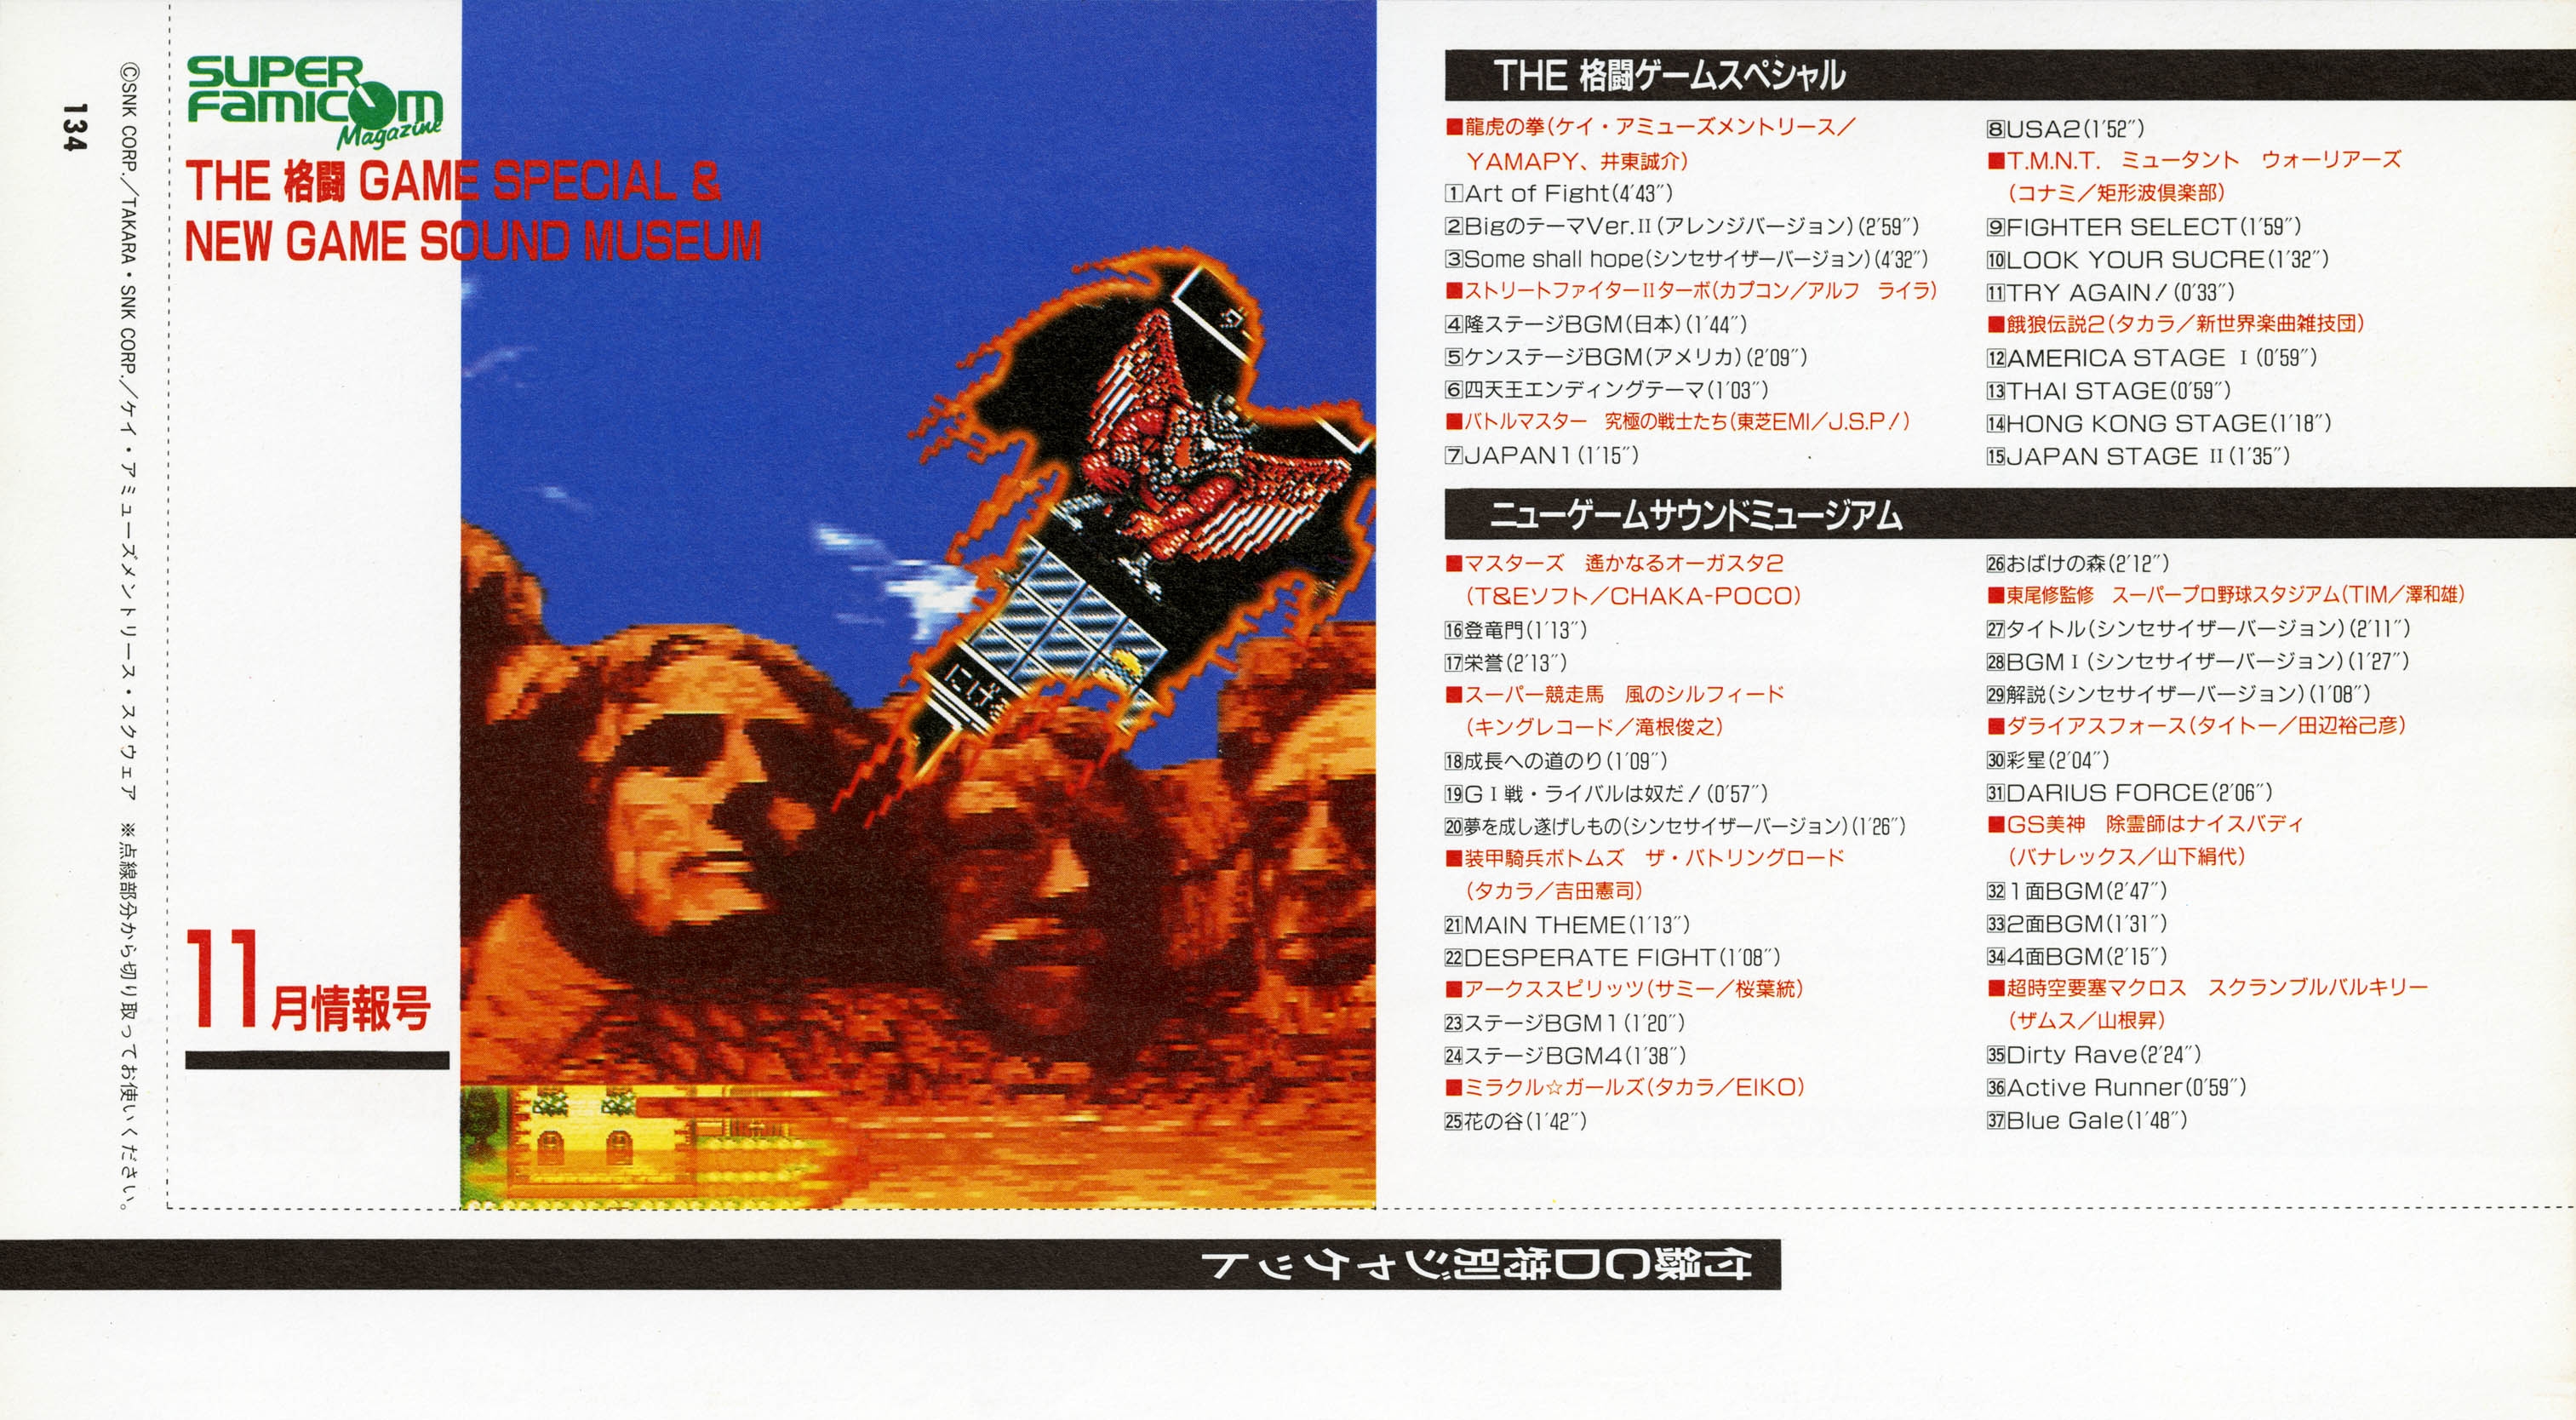 Super Famicom Magazine November News Volume Special Supplement